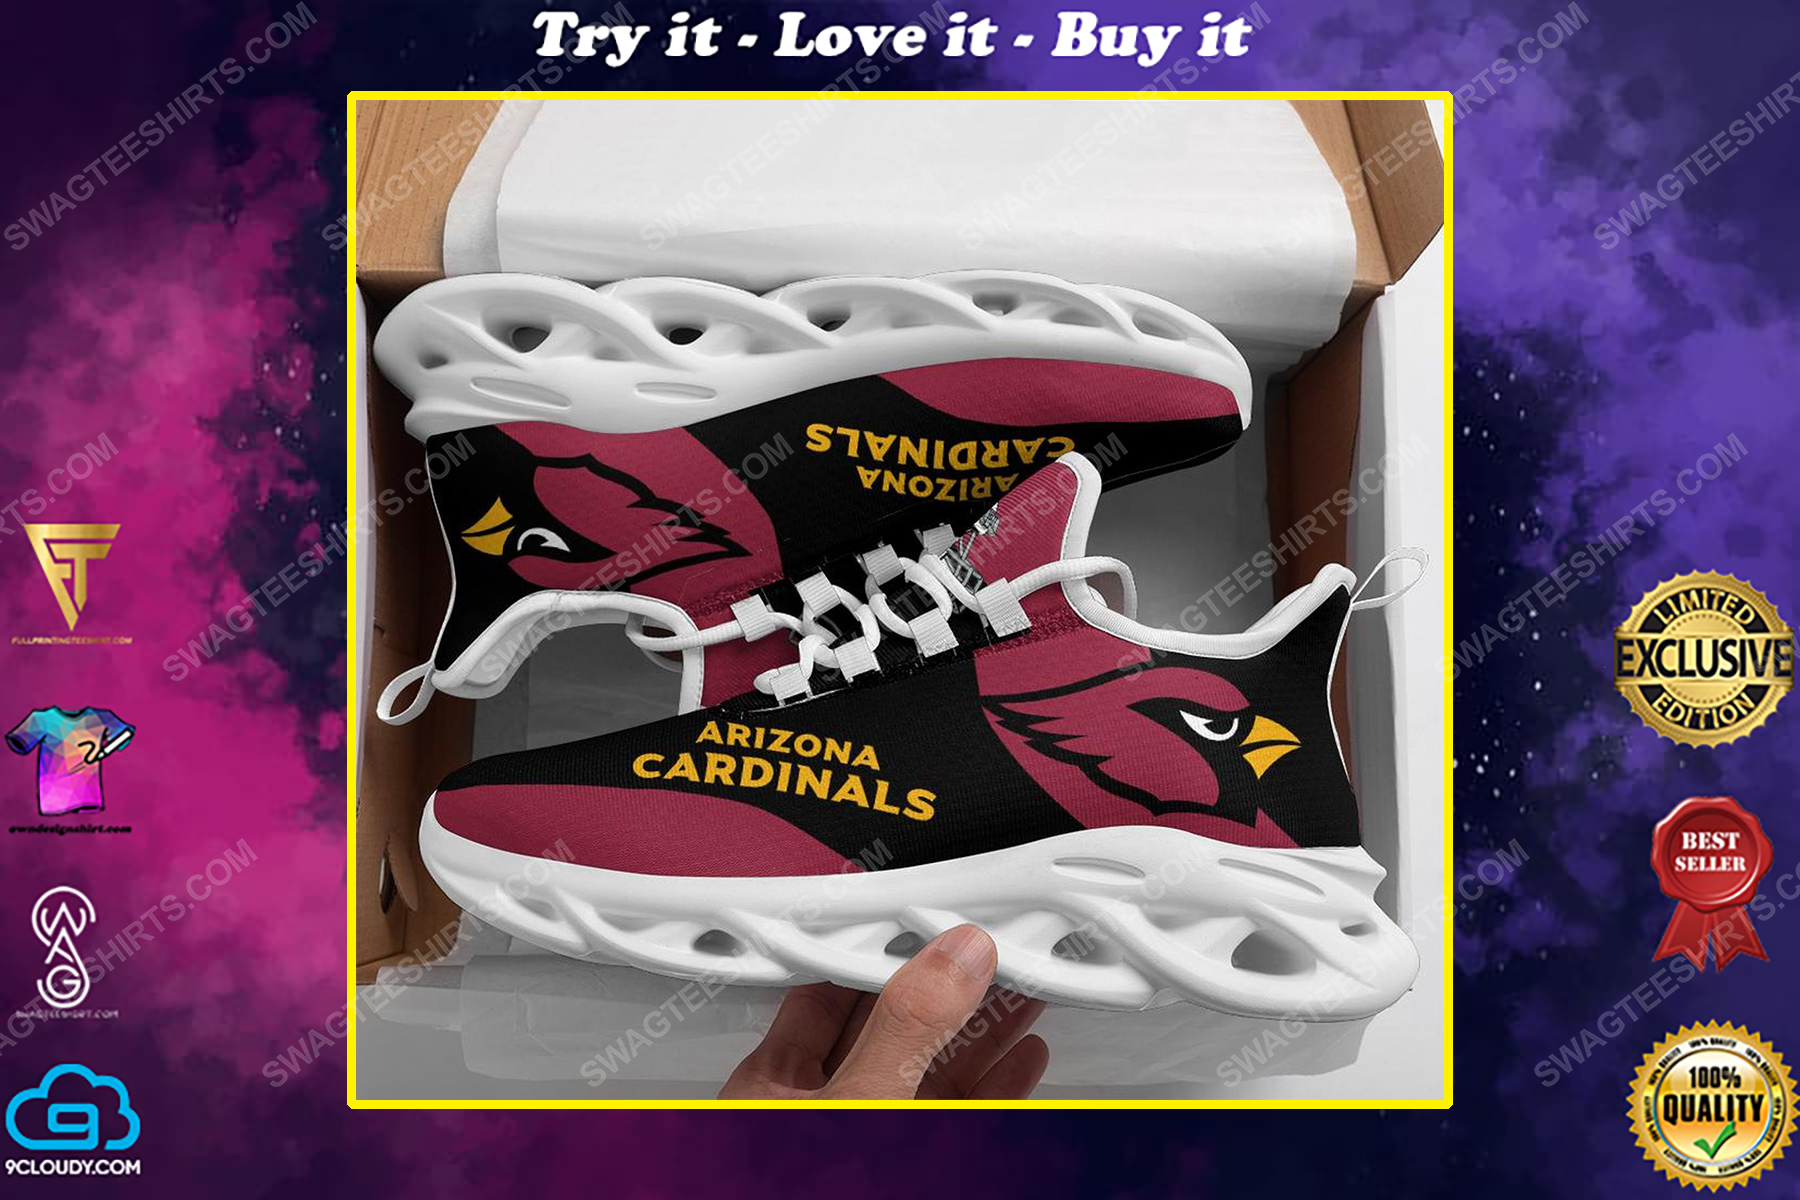 The arizona cardinals football team max soul shoes